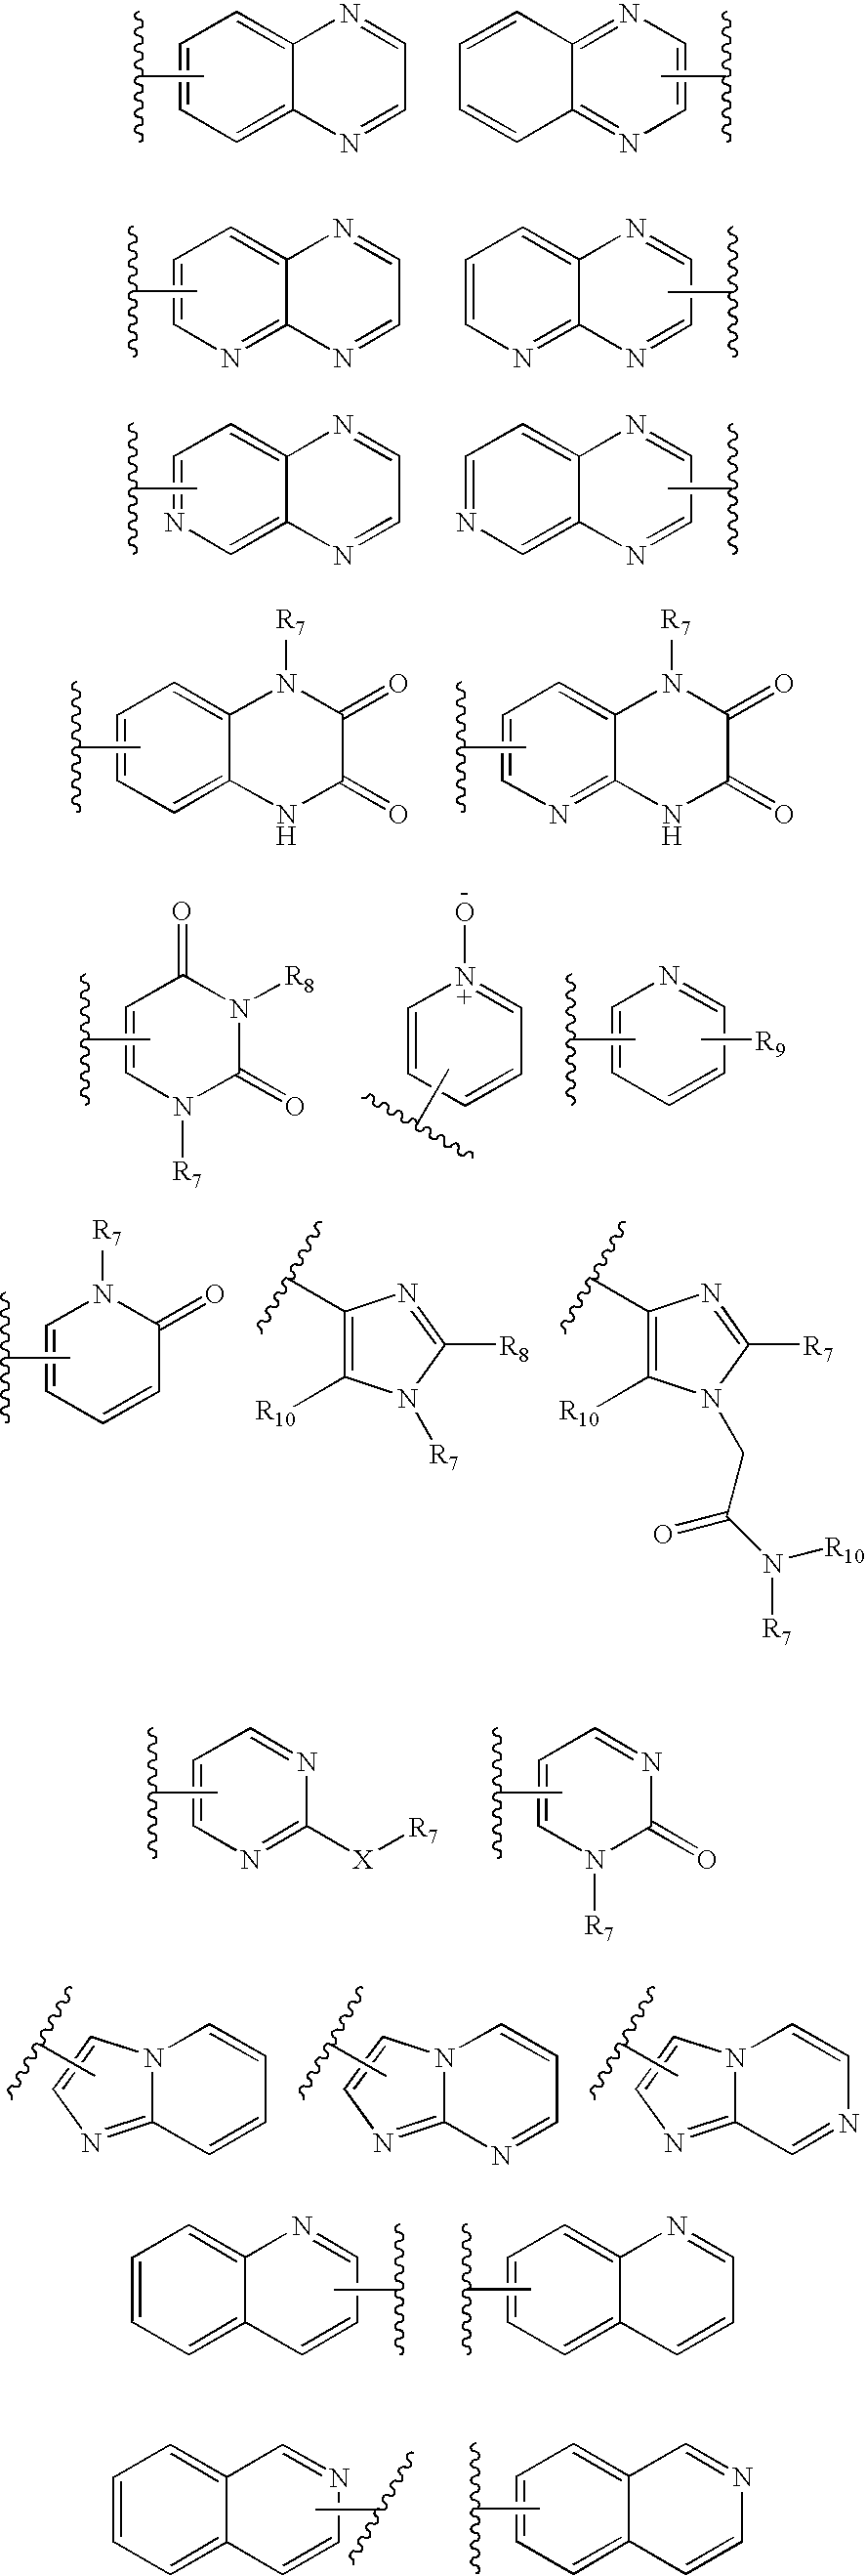 Benzooxazole and benzothiazole antagonists of gonadotropin releasing hormone receptor